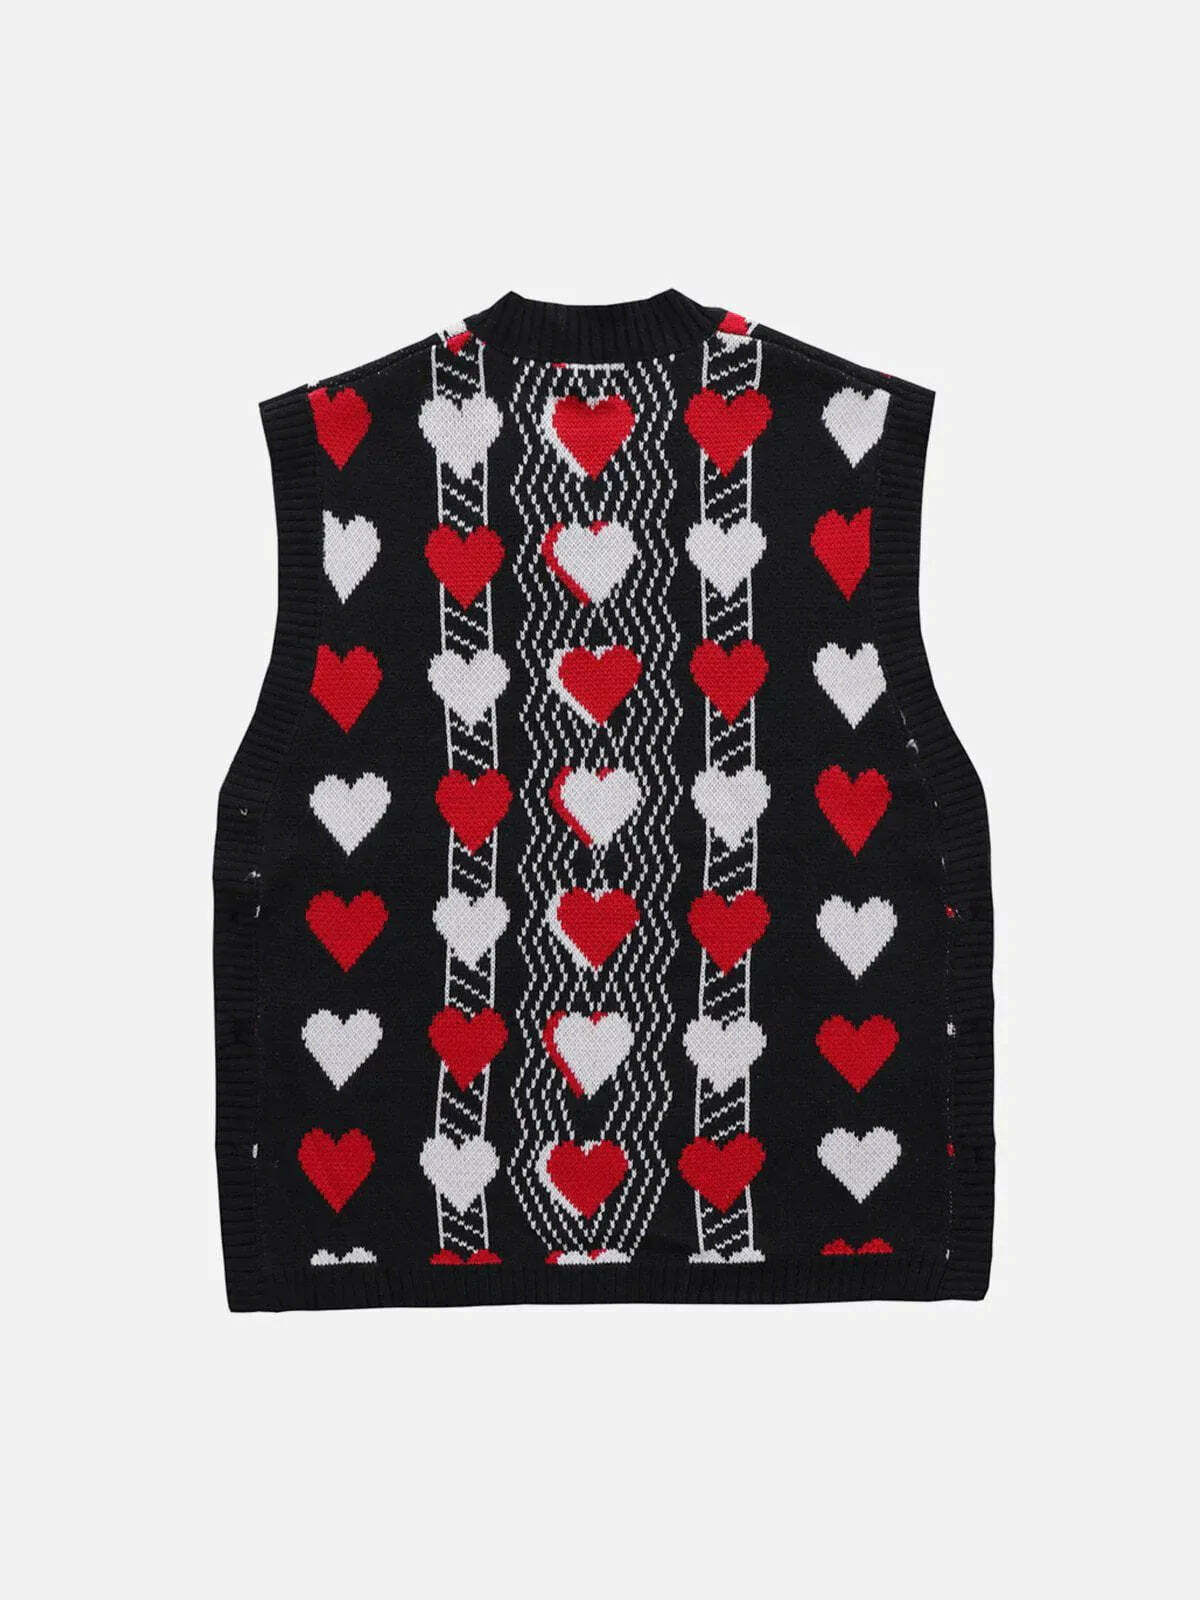 retro clash sweater vest edgy  colorful y2k fashion 8718